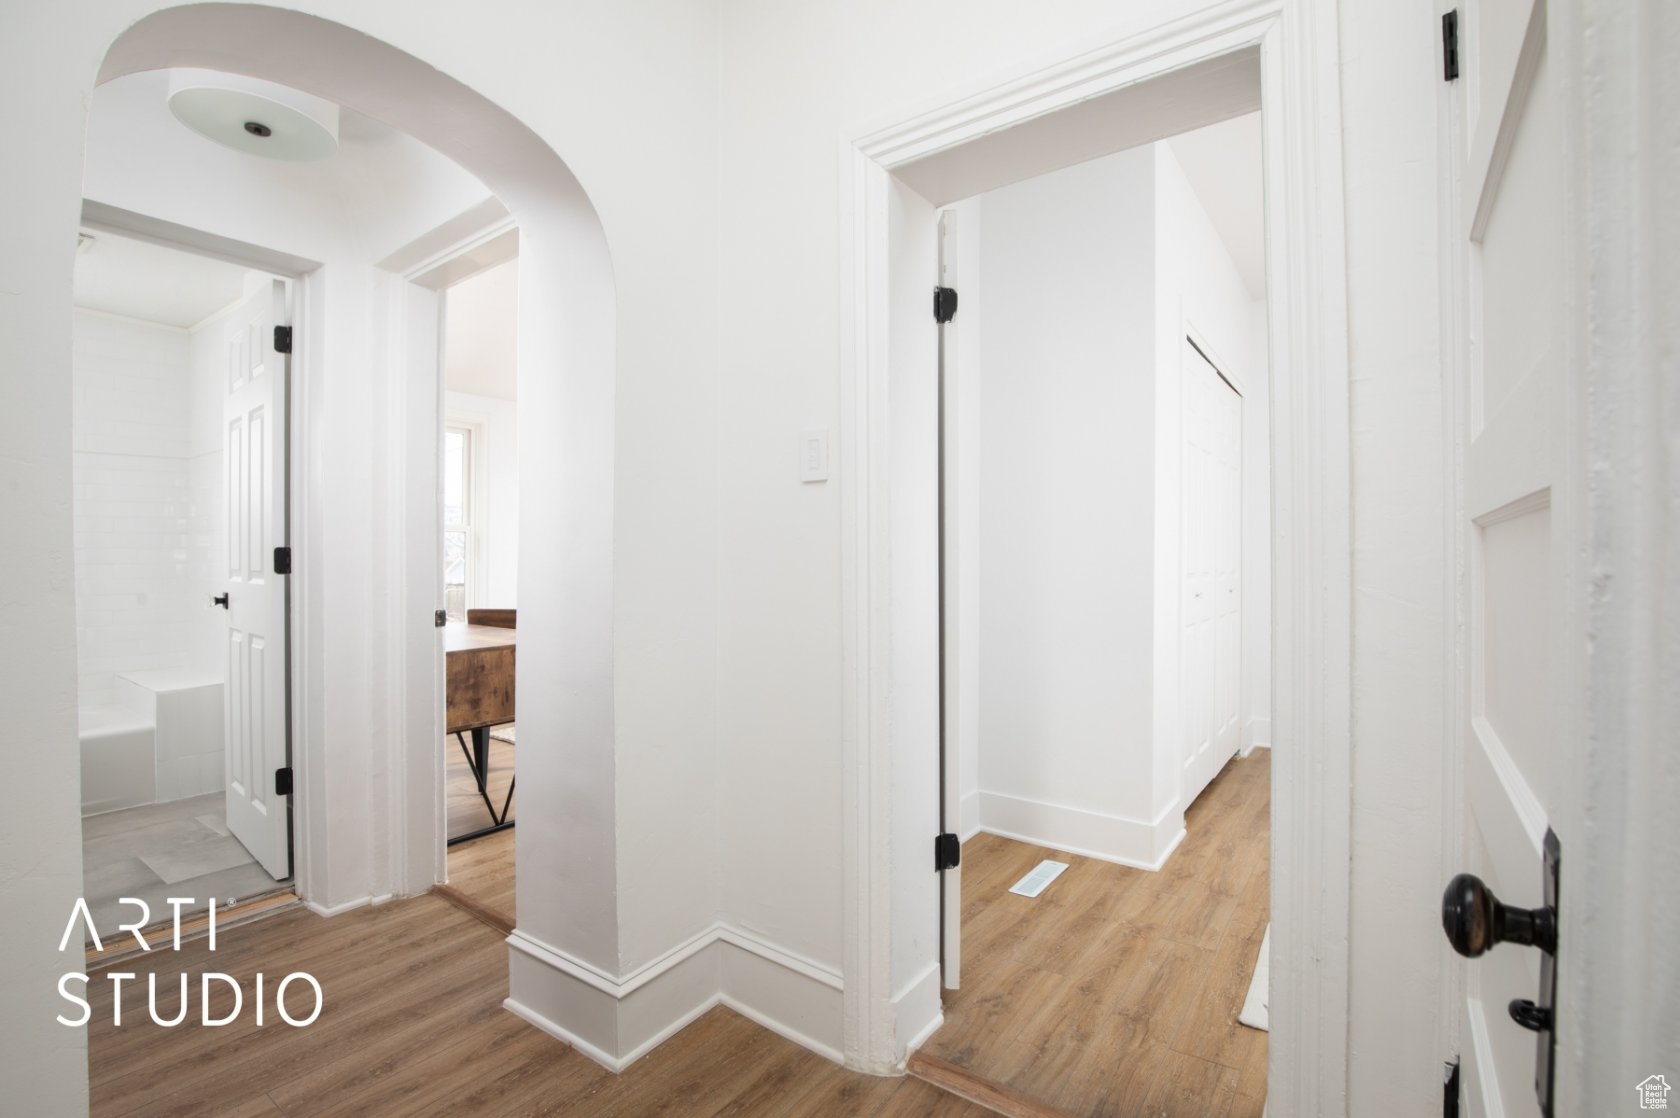 Corridor featuring light wood-type flooring